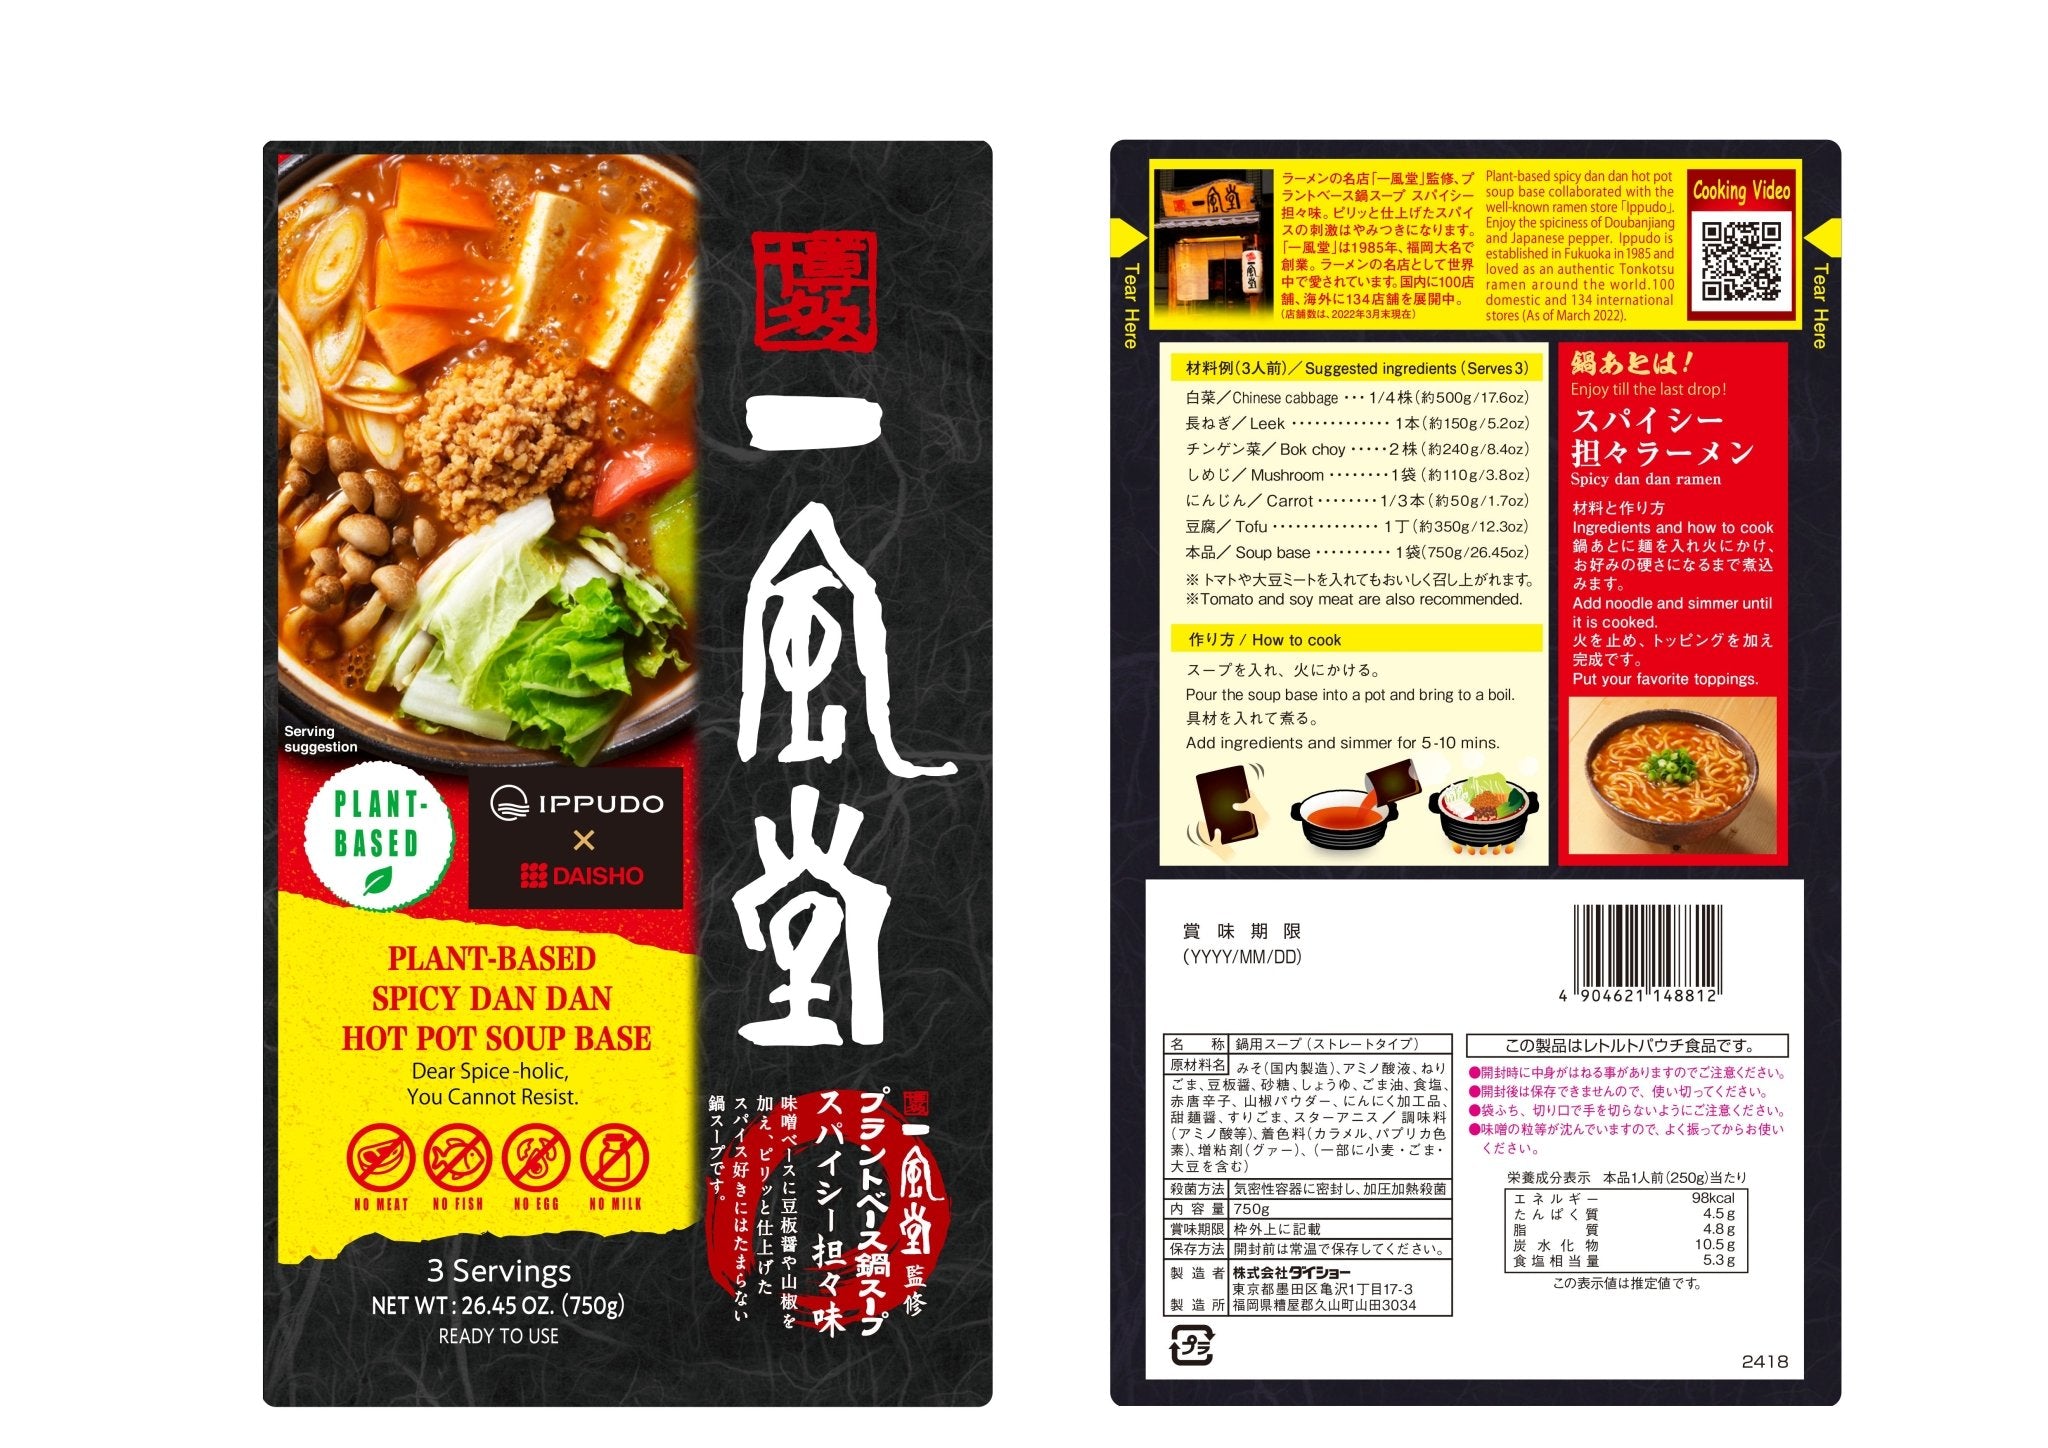 Daisho IPPUDO Plant-Based Spicy Dandan Hot Pot Soup Base - Tokyo Fresh Direct